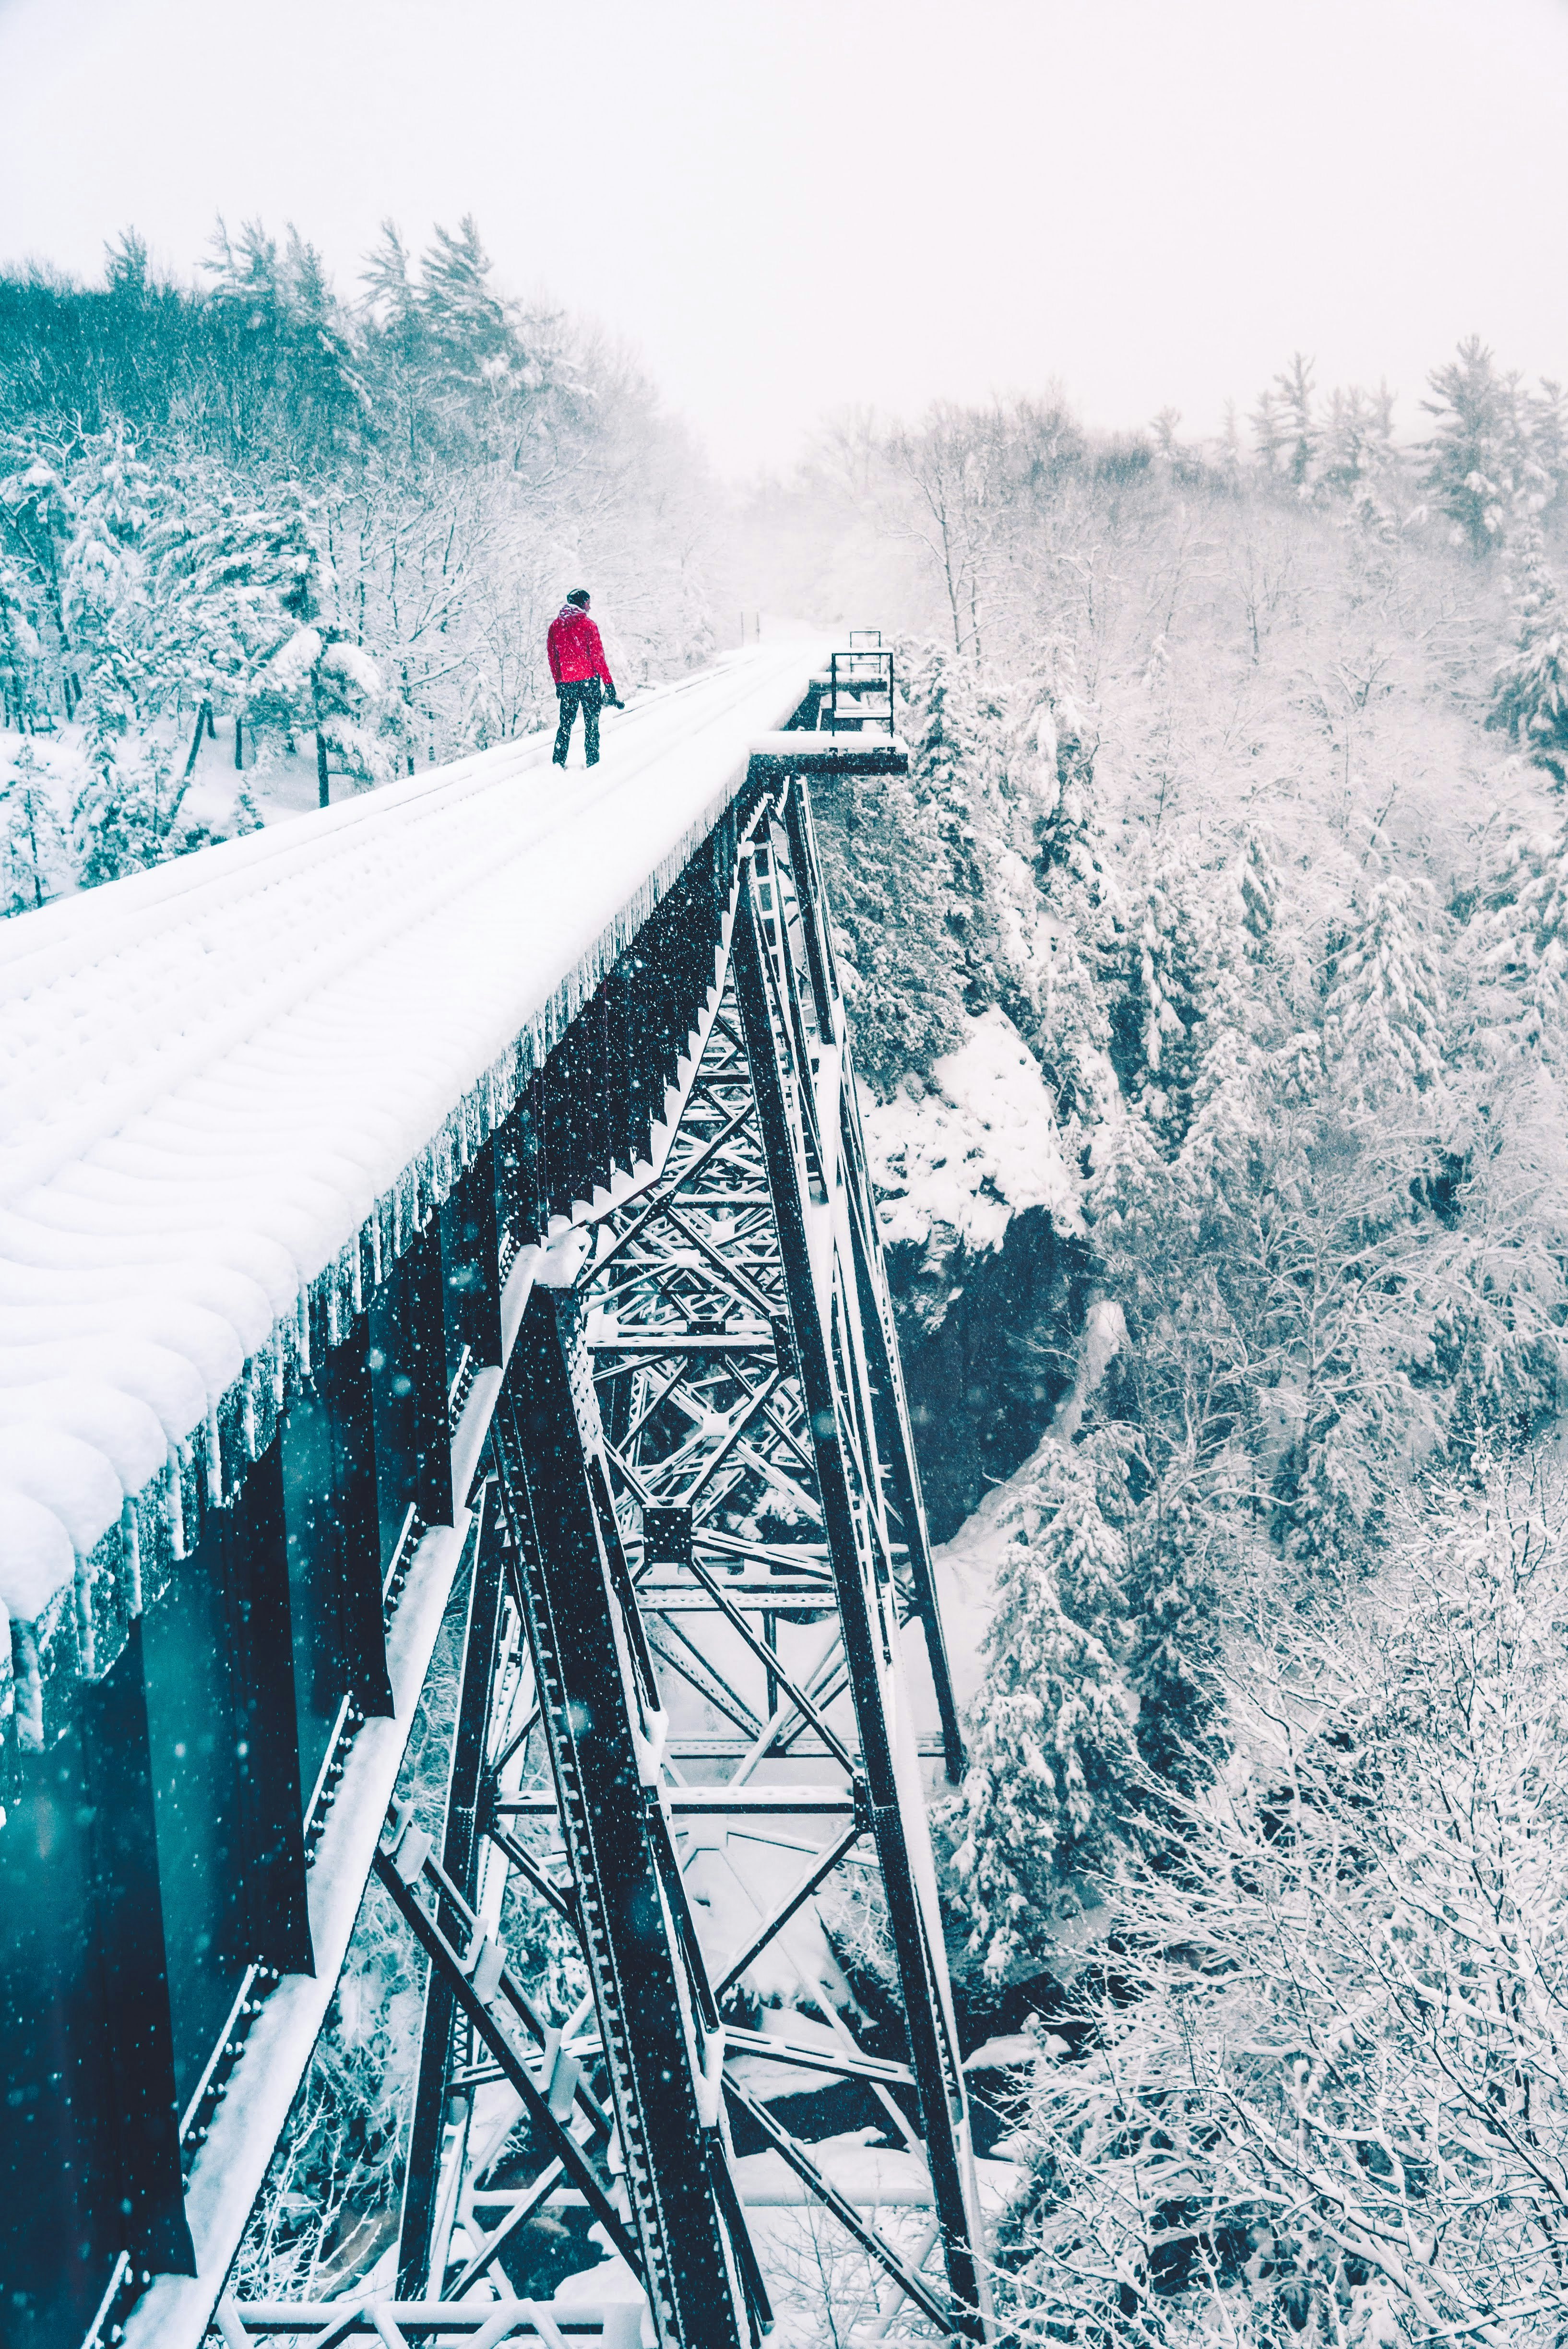 man wearing red jacket walking on the snowy bridge